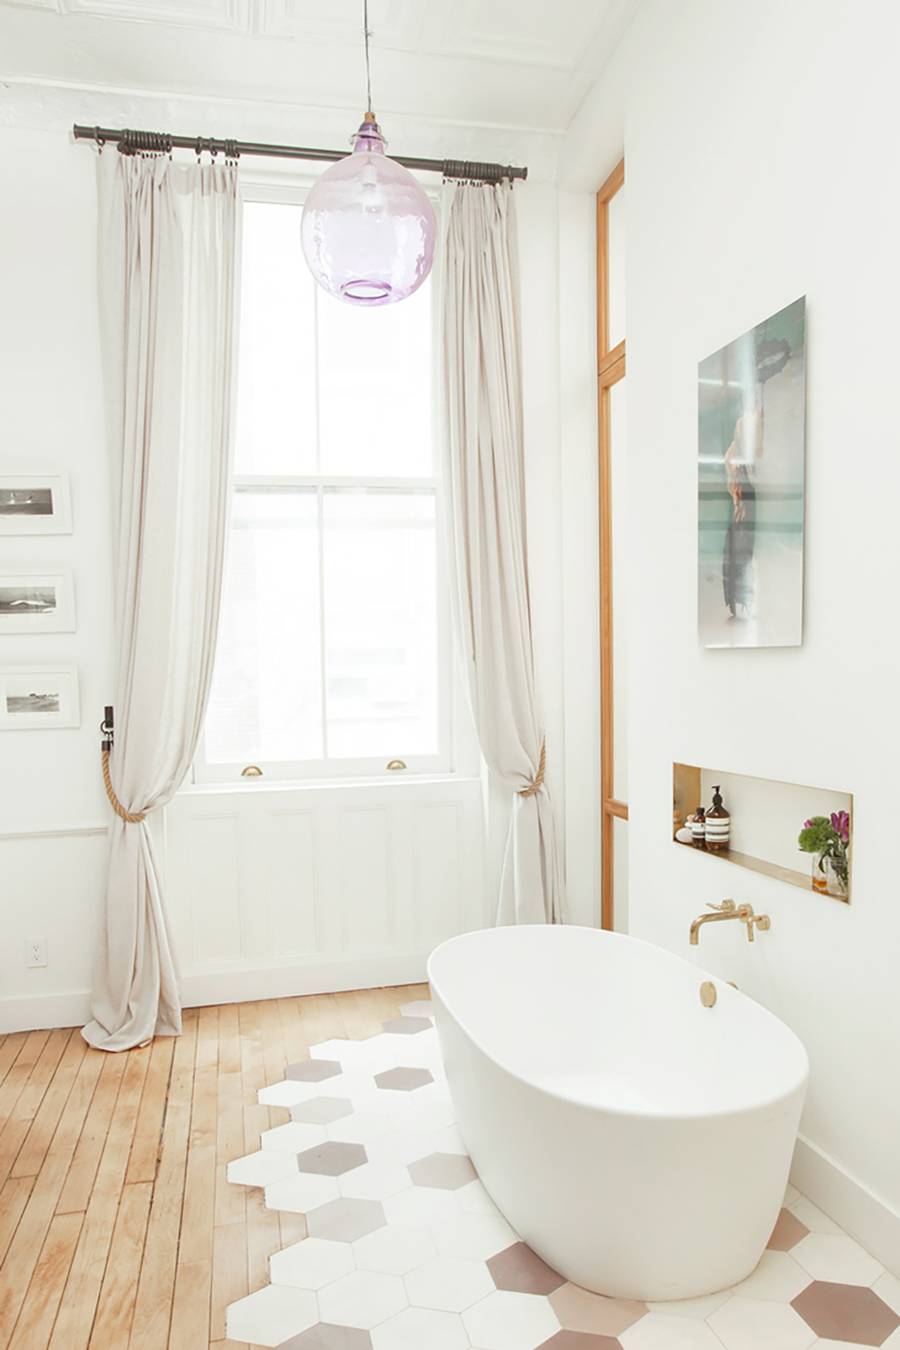 quirky bathroom design longer curtains with tiedback rope glass pendant light sleek bathtub in white geometric tile floor accent on light wood floors modern artwork